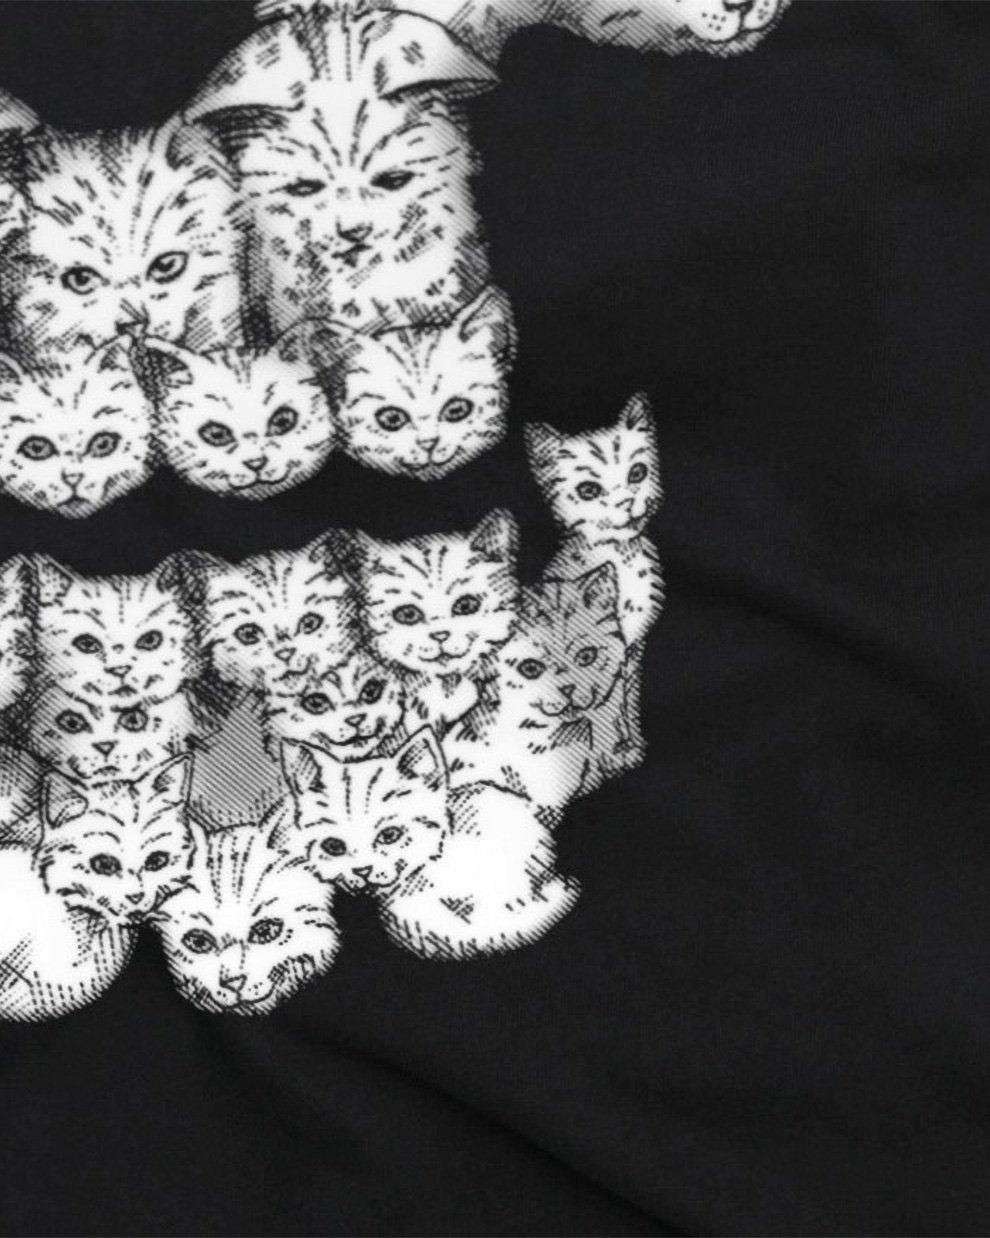 style3 Print-Shirt Herren T-Shirt Cat tattoo Skull totenkopf mieze miez rock bbt katzen kater katze